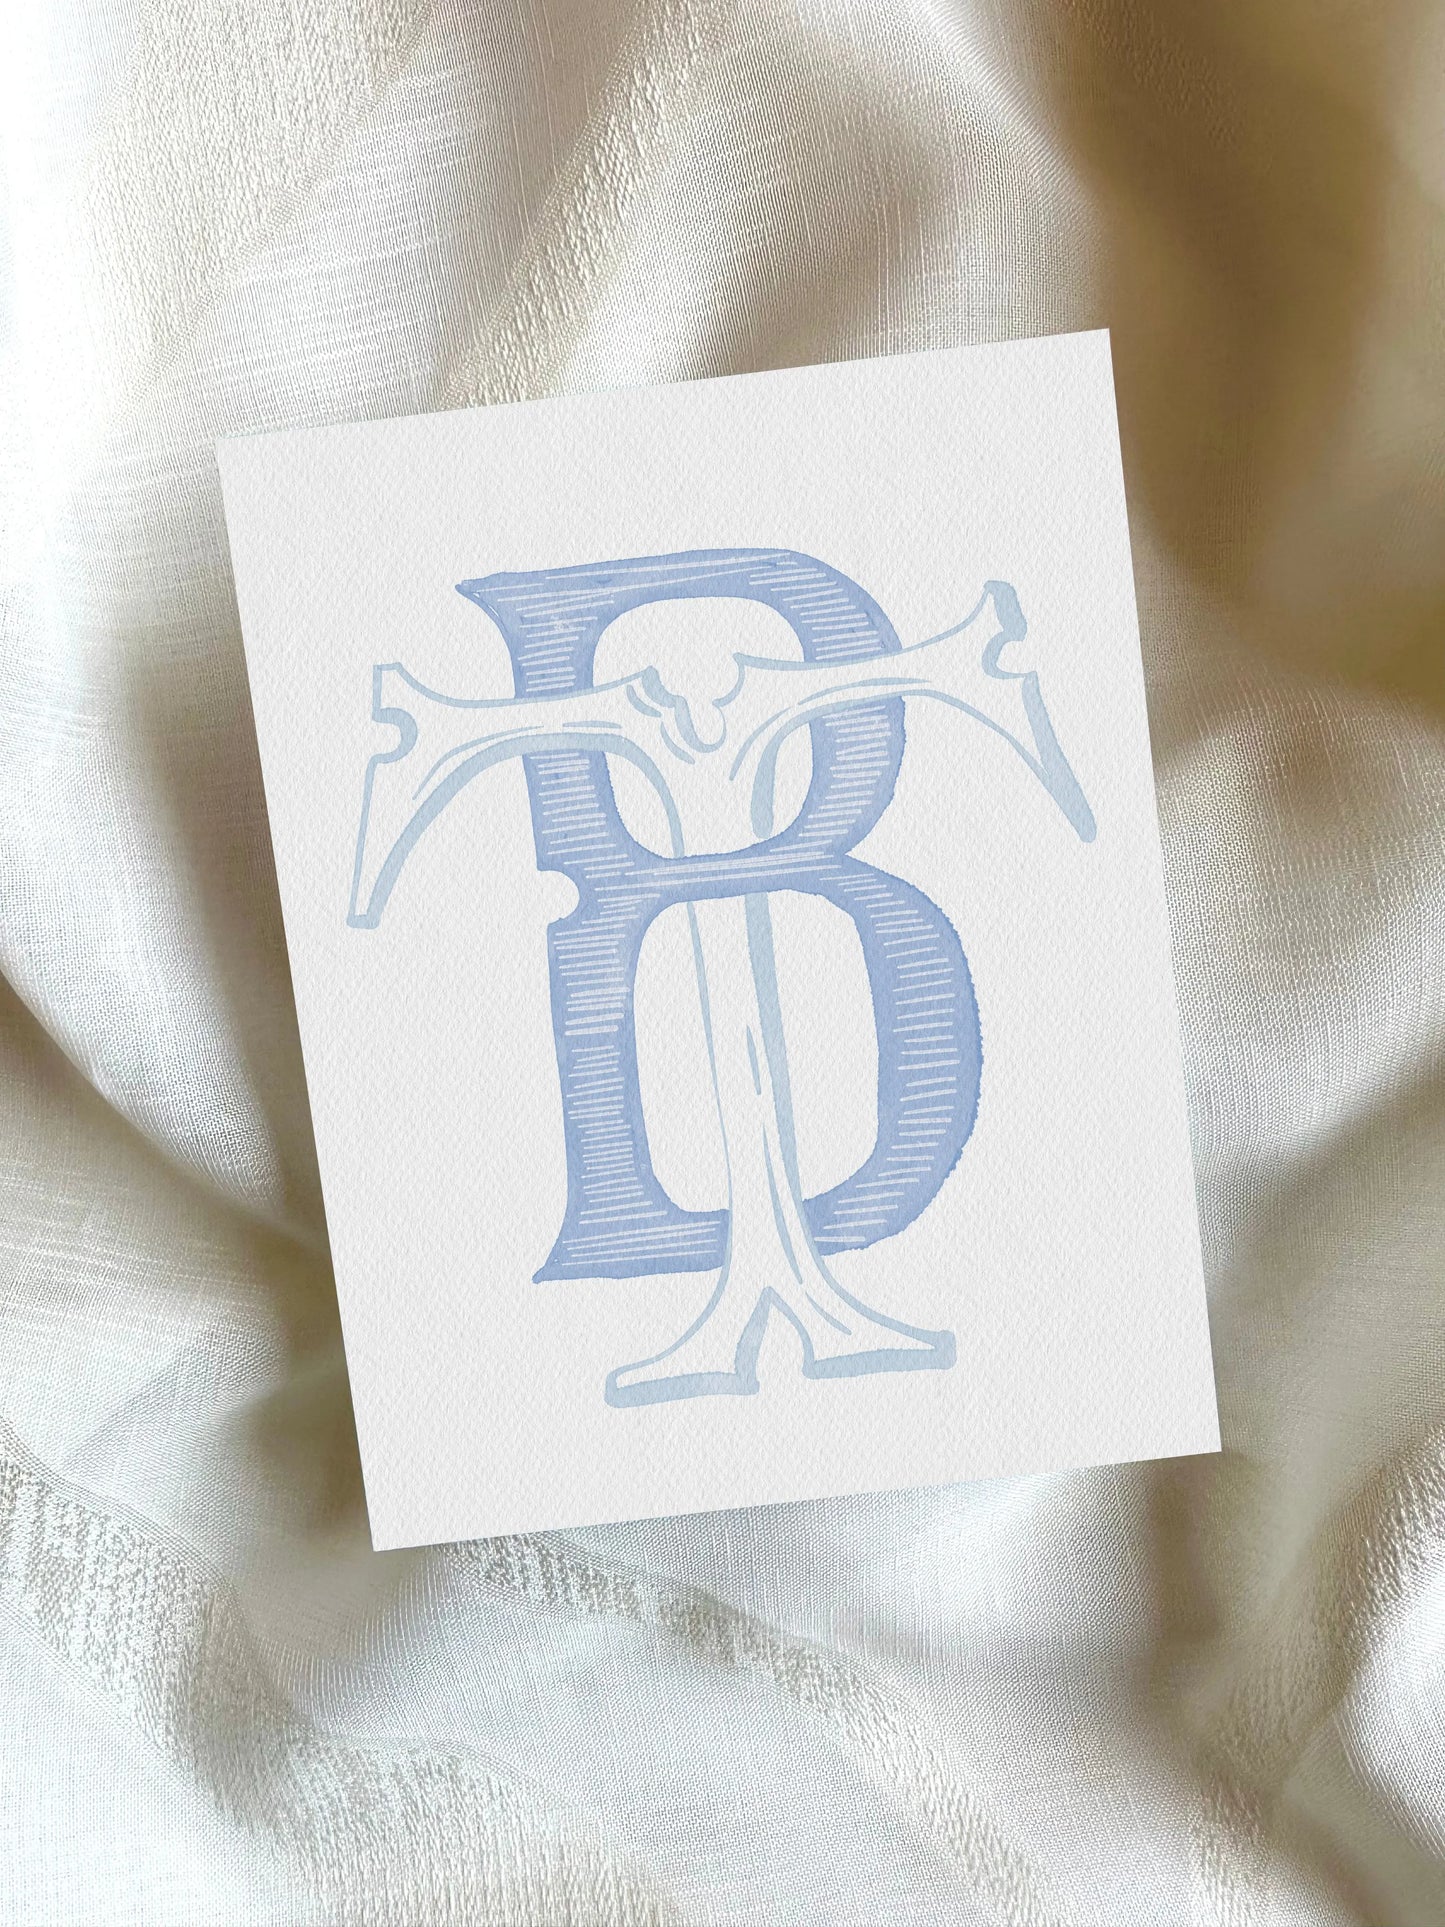 2 Letter Monogram with Letters TB | Digital Download - Wedding Monogram SVG, Personal Logo, Wedding Logo for Wedding Invitations The Wedding Crest Lab